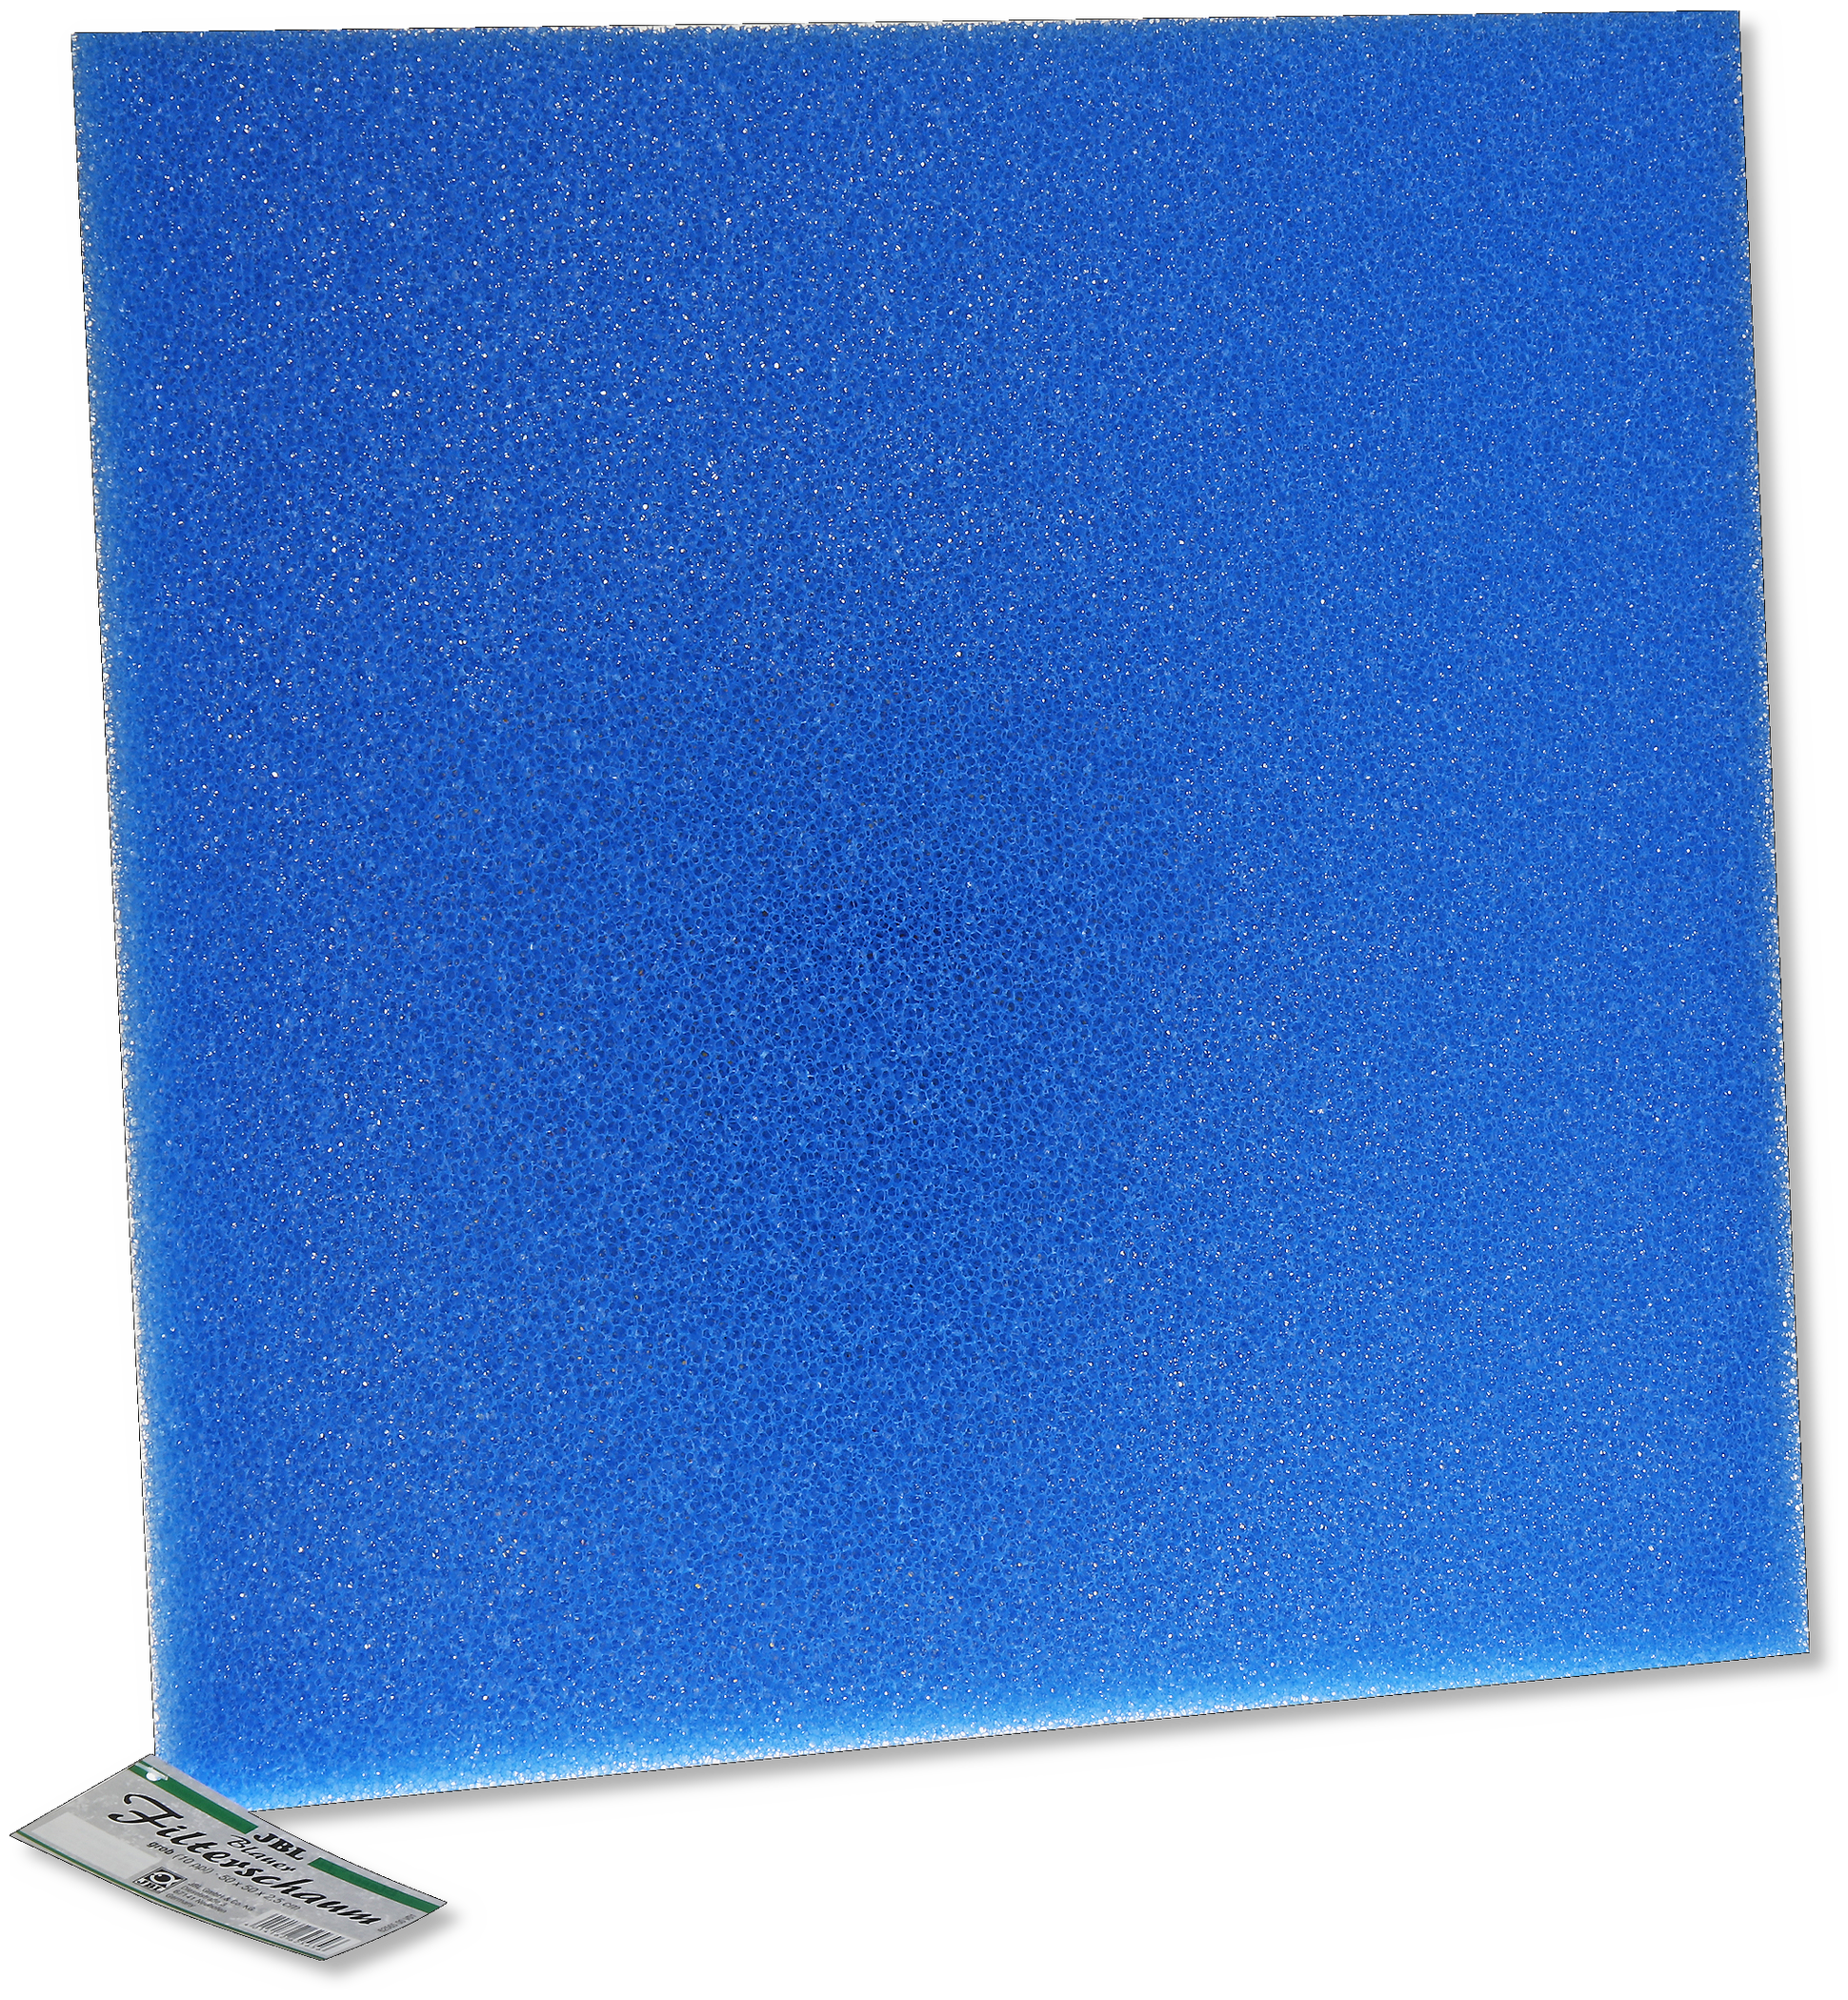 JBL Filterschaum blau grob 5cm